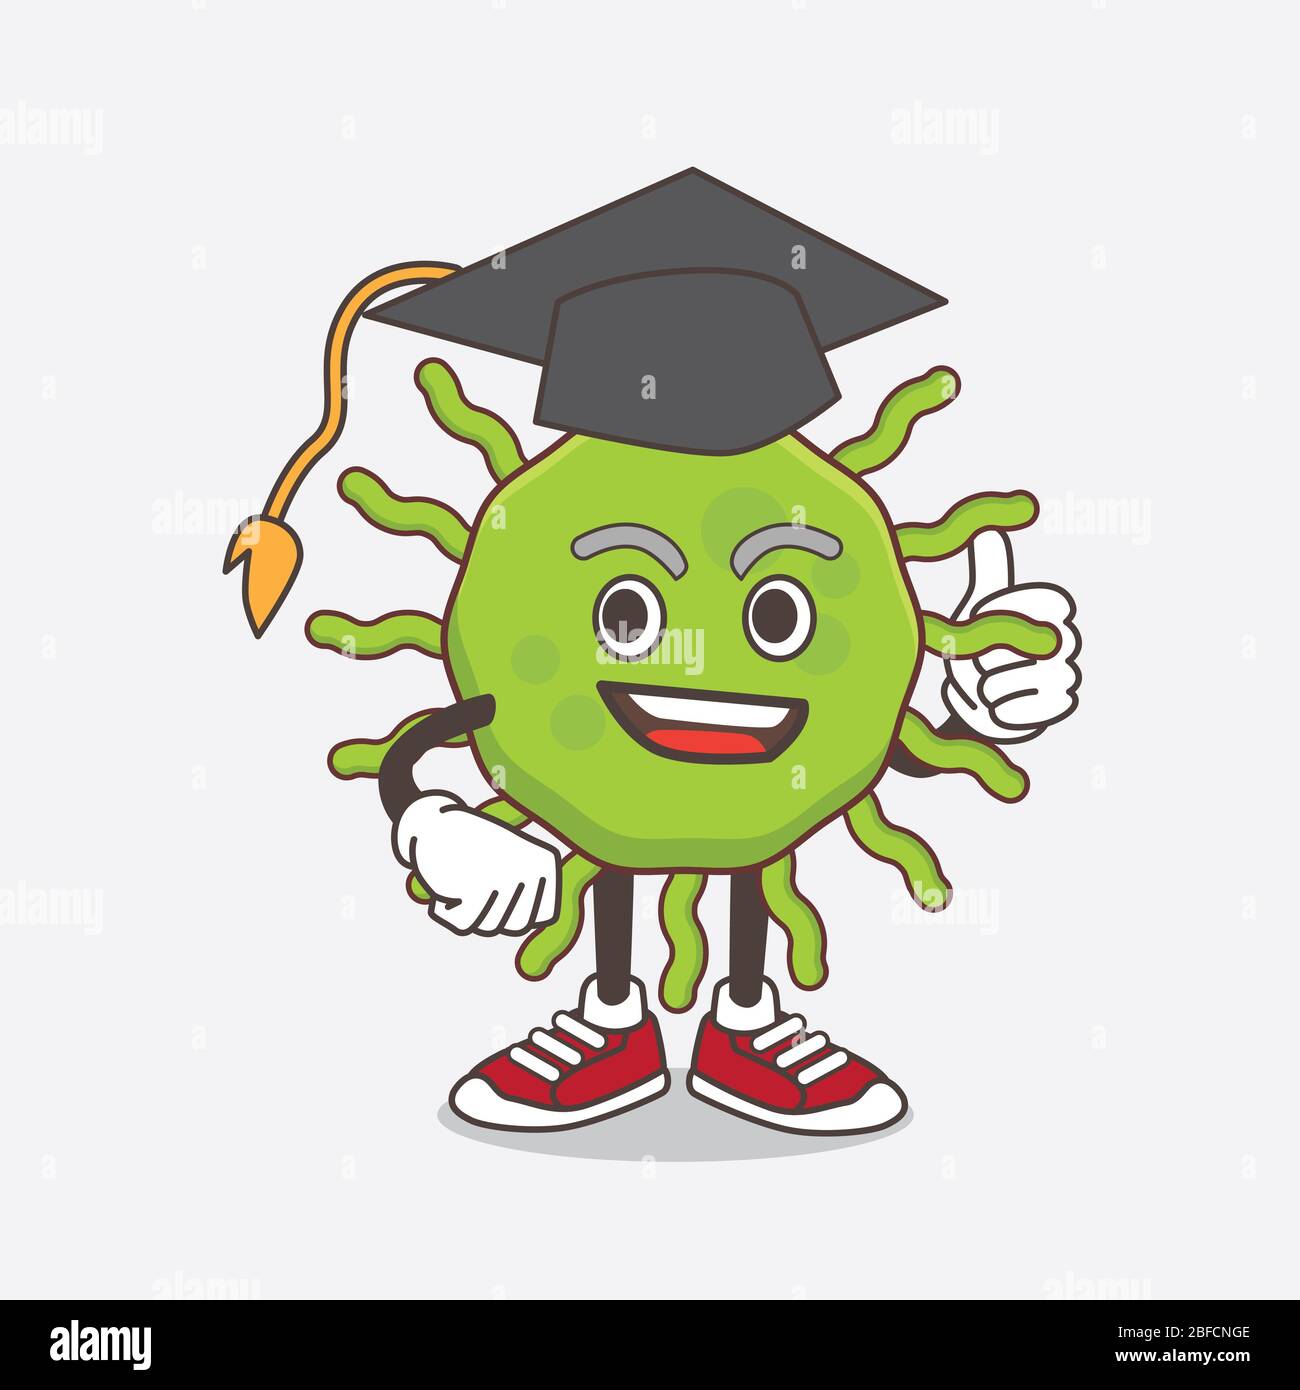 An illustration of Green Virus cartoon mascot character in a black Graduation hat Stock Photo